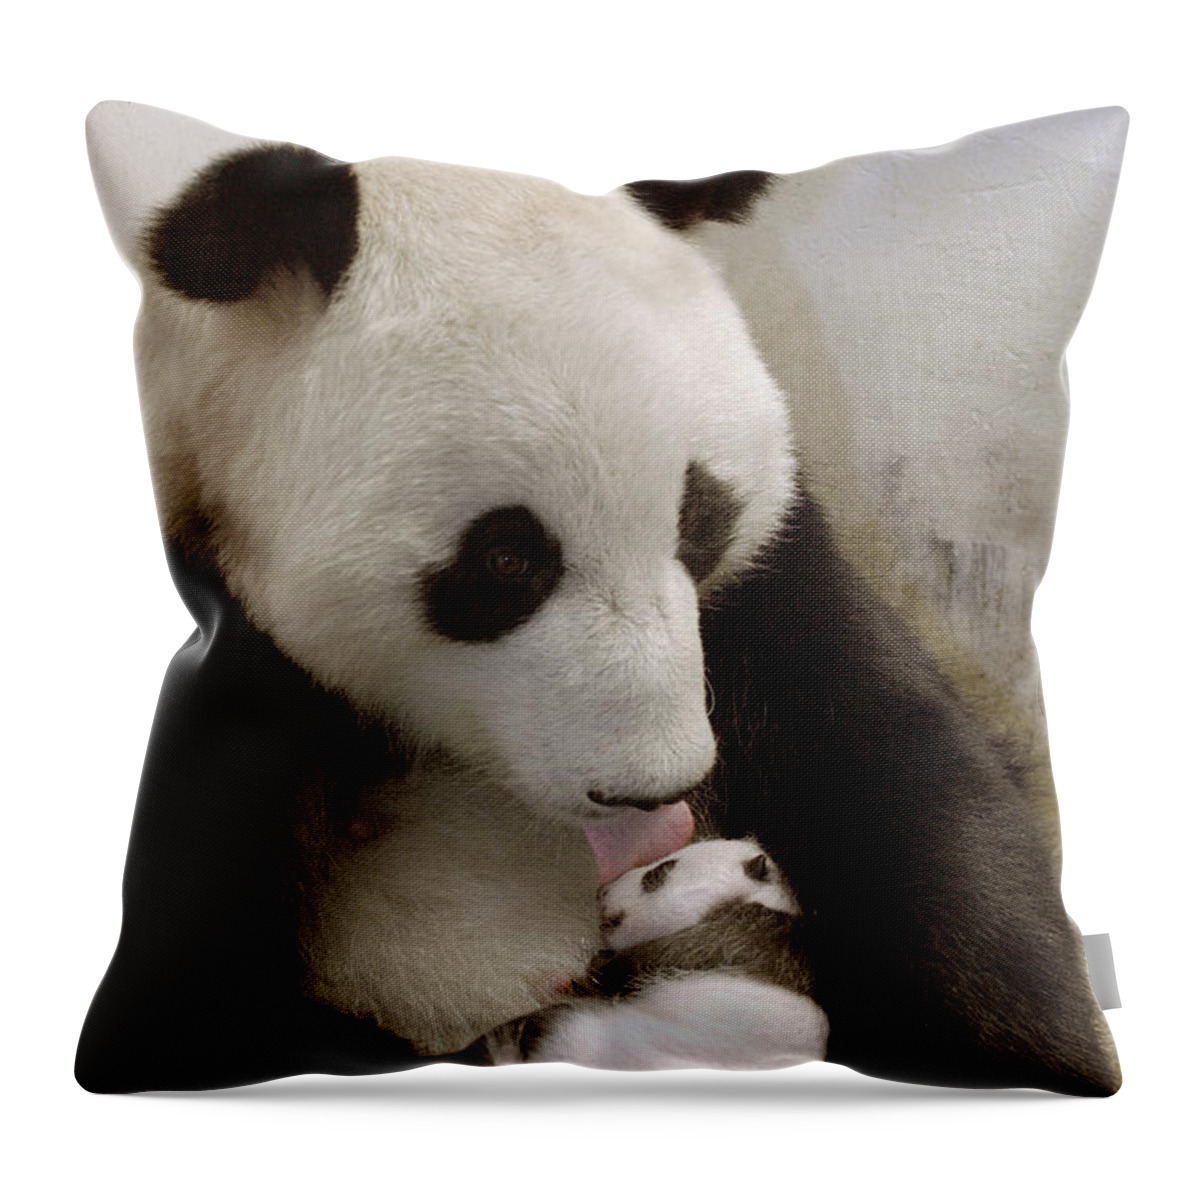 Mp Throw Pillow featuring the photograph Giant Panda Ailuropoda Melanoleuca Xi by Katherine Feng